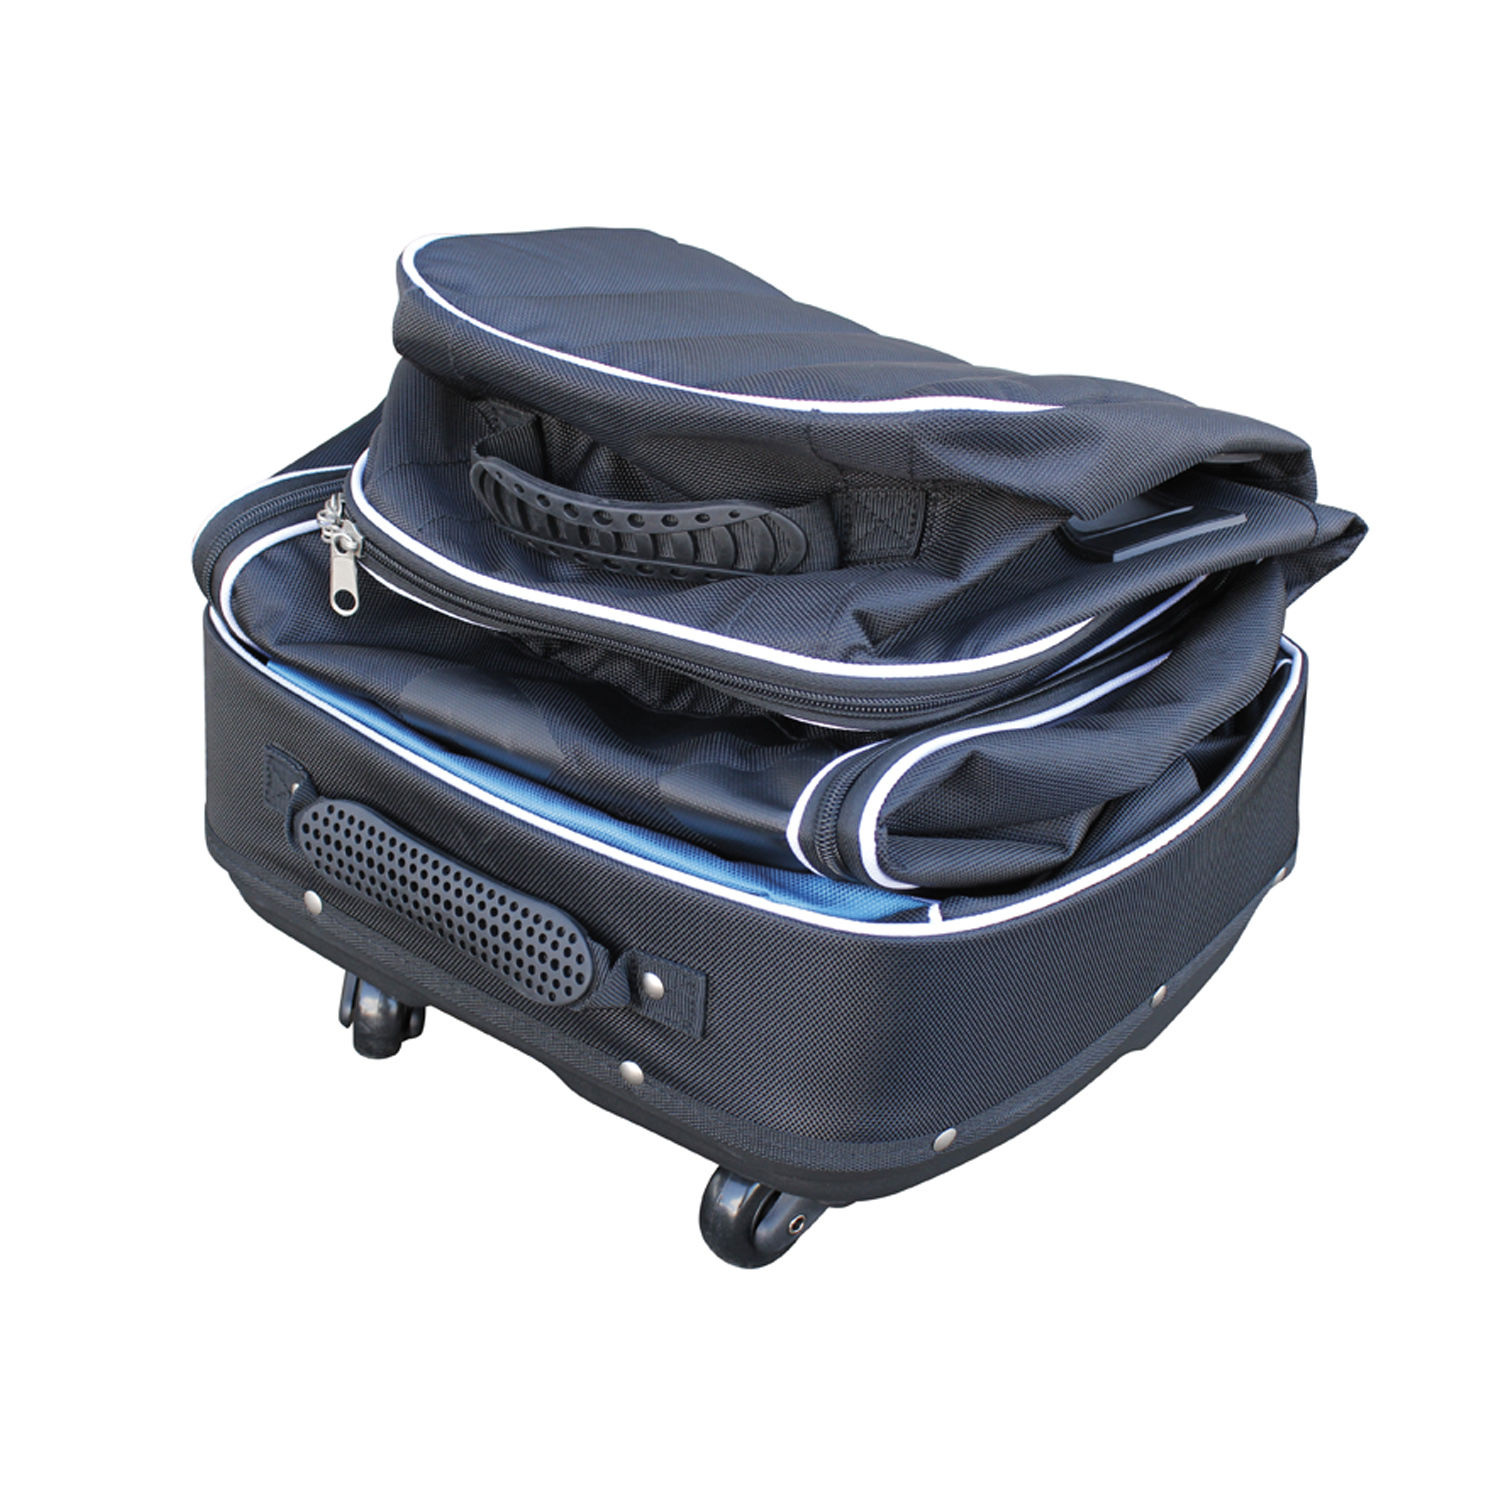 4 wheel golf travel bag